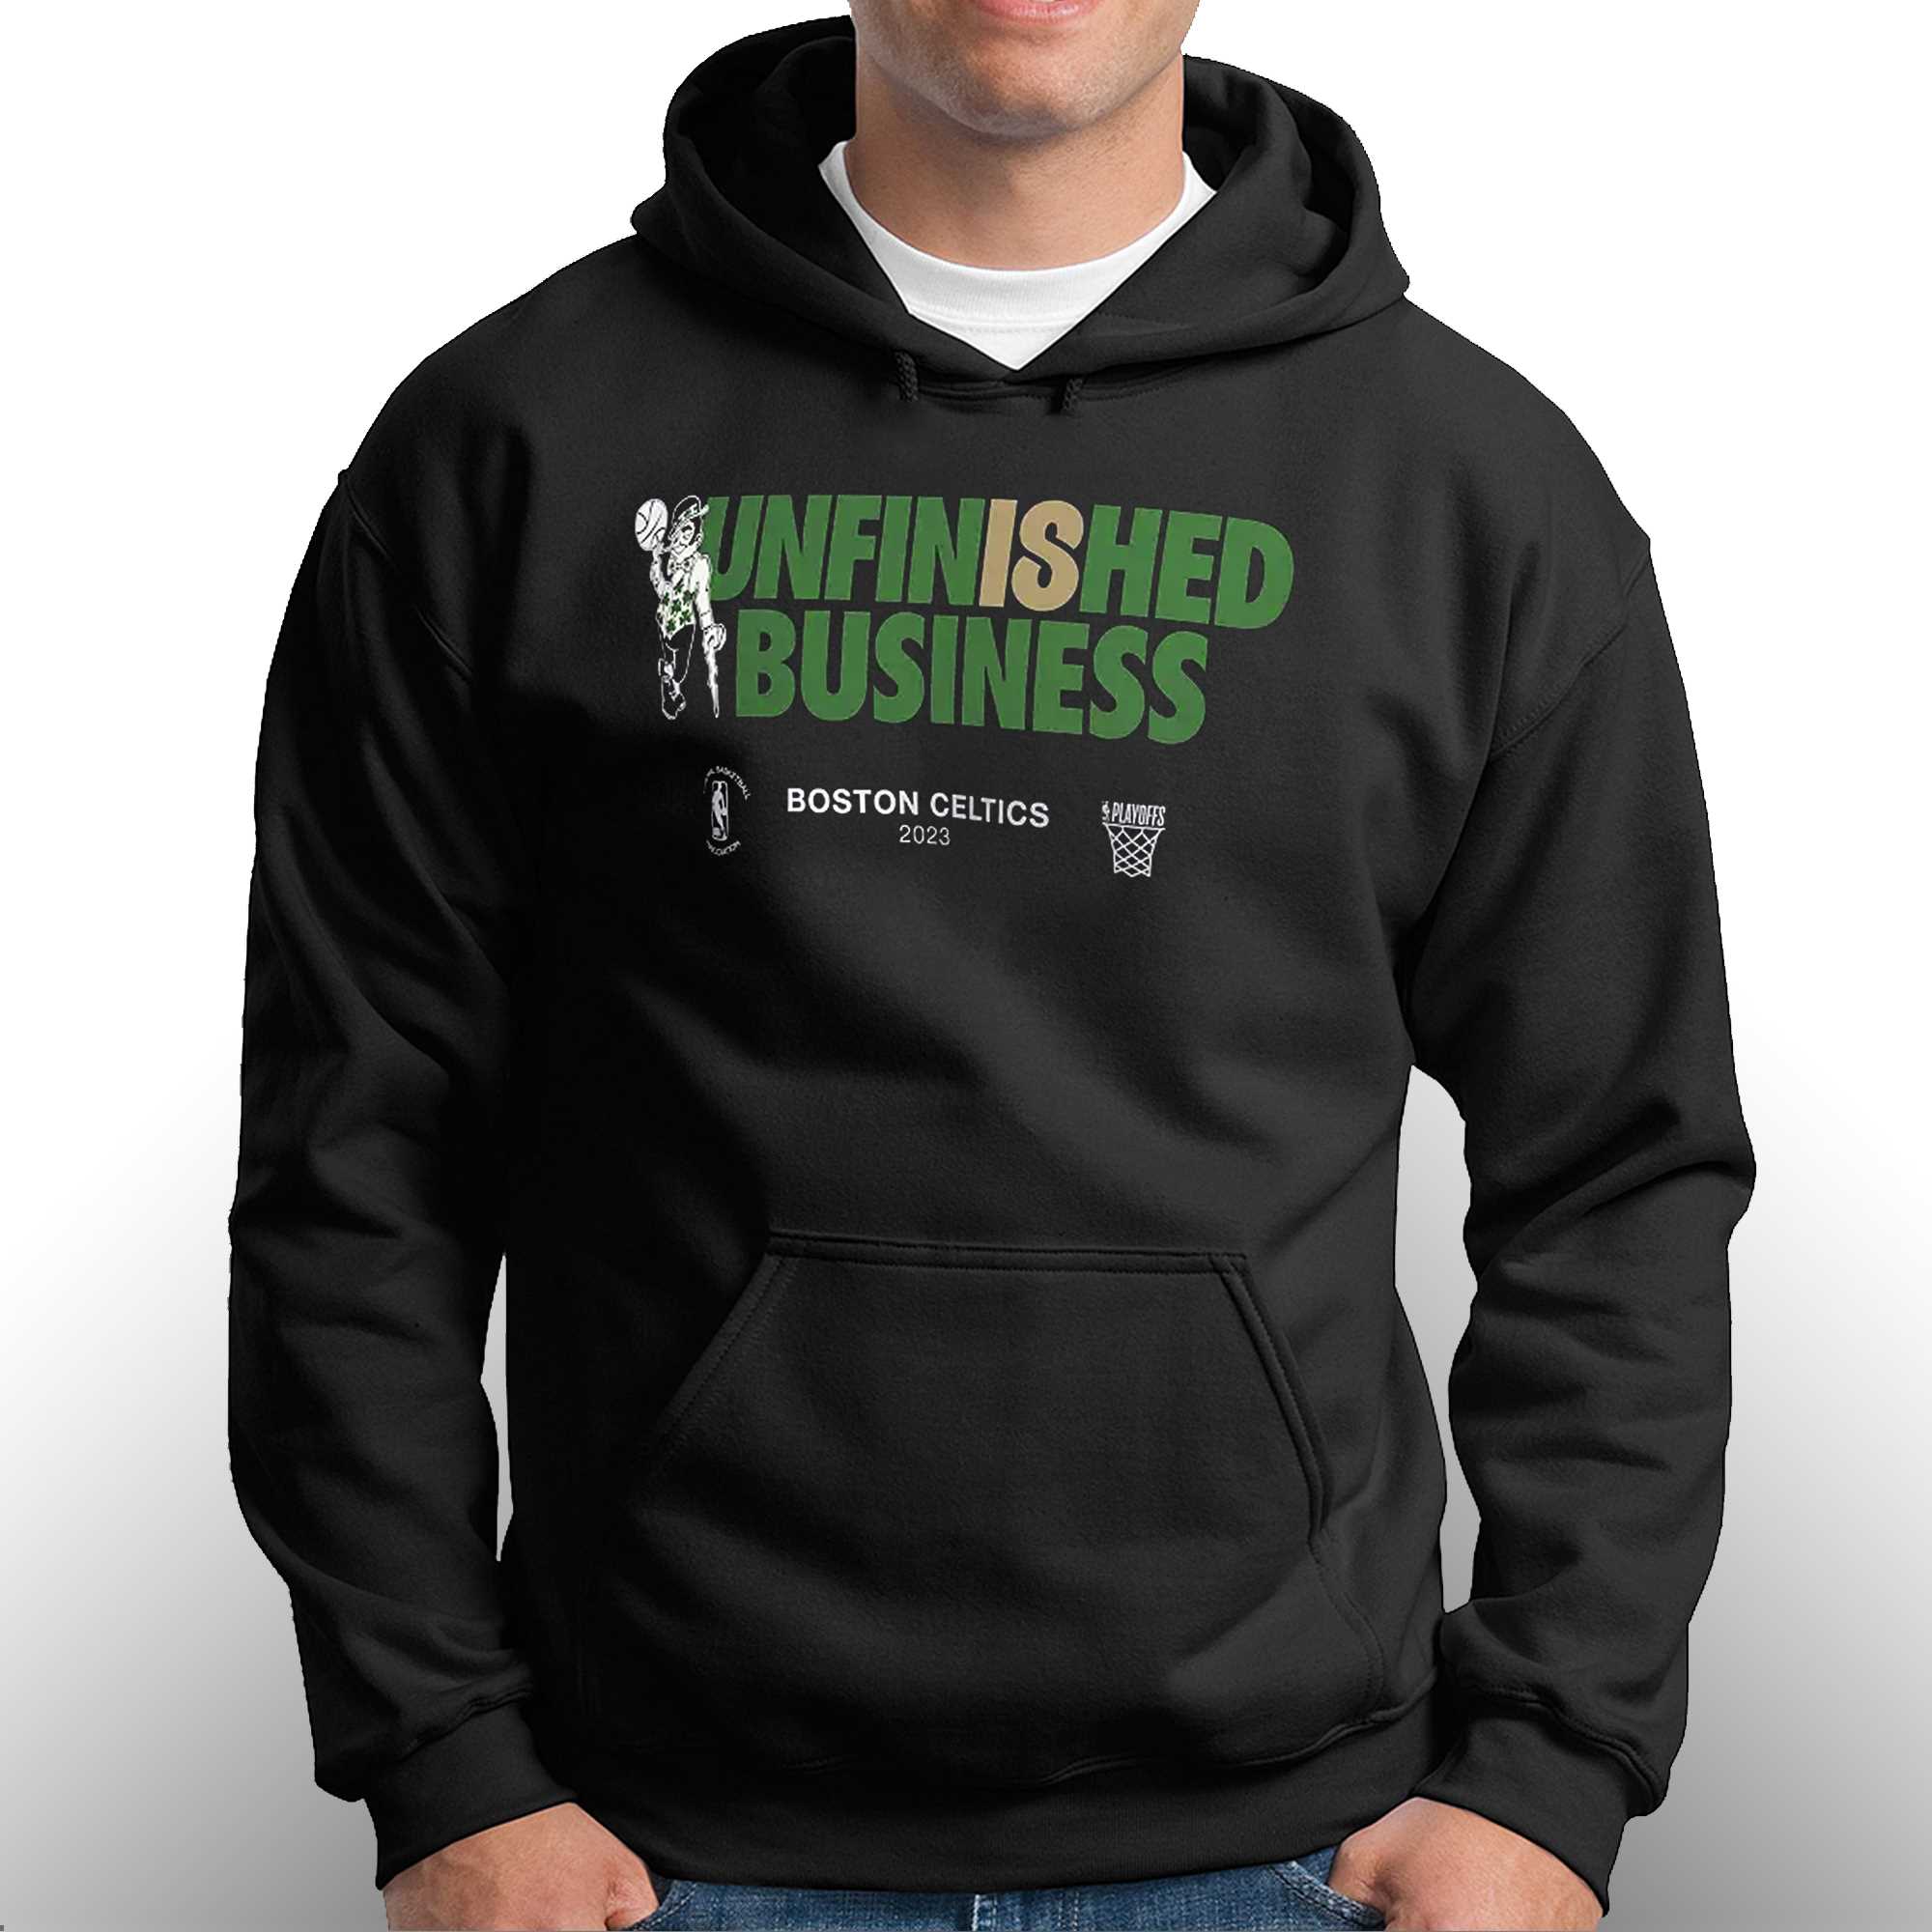 Official unfinished Business Boston Celtics 2023 T-shirt